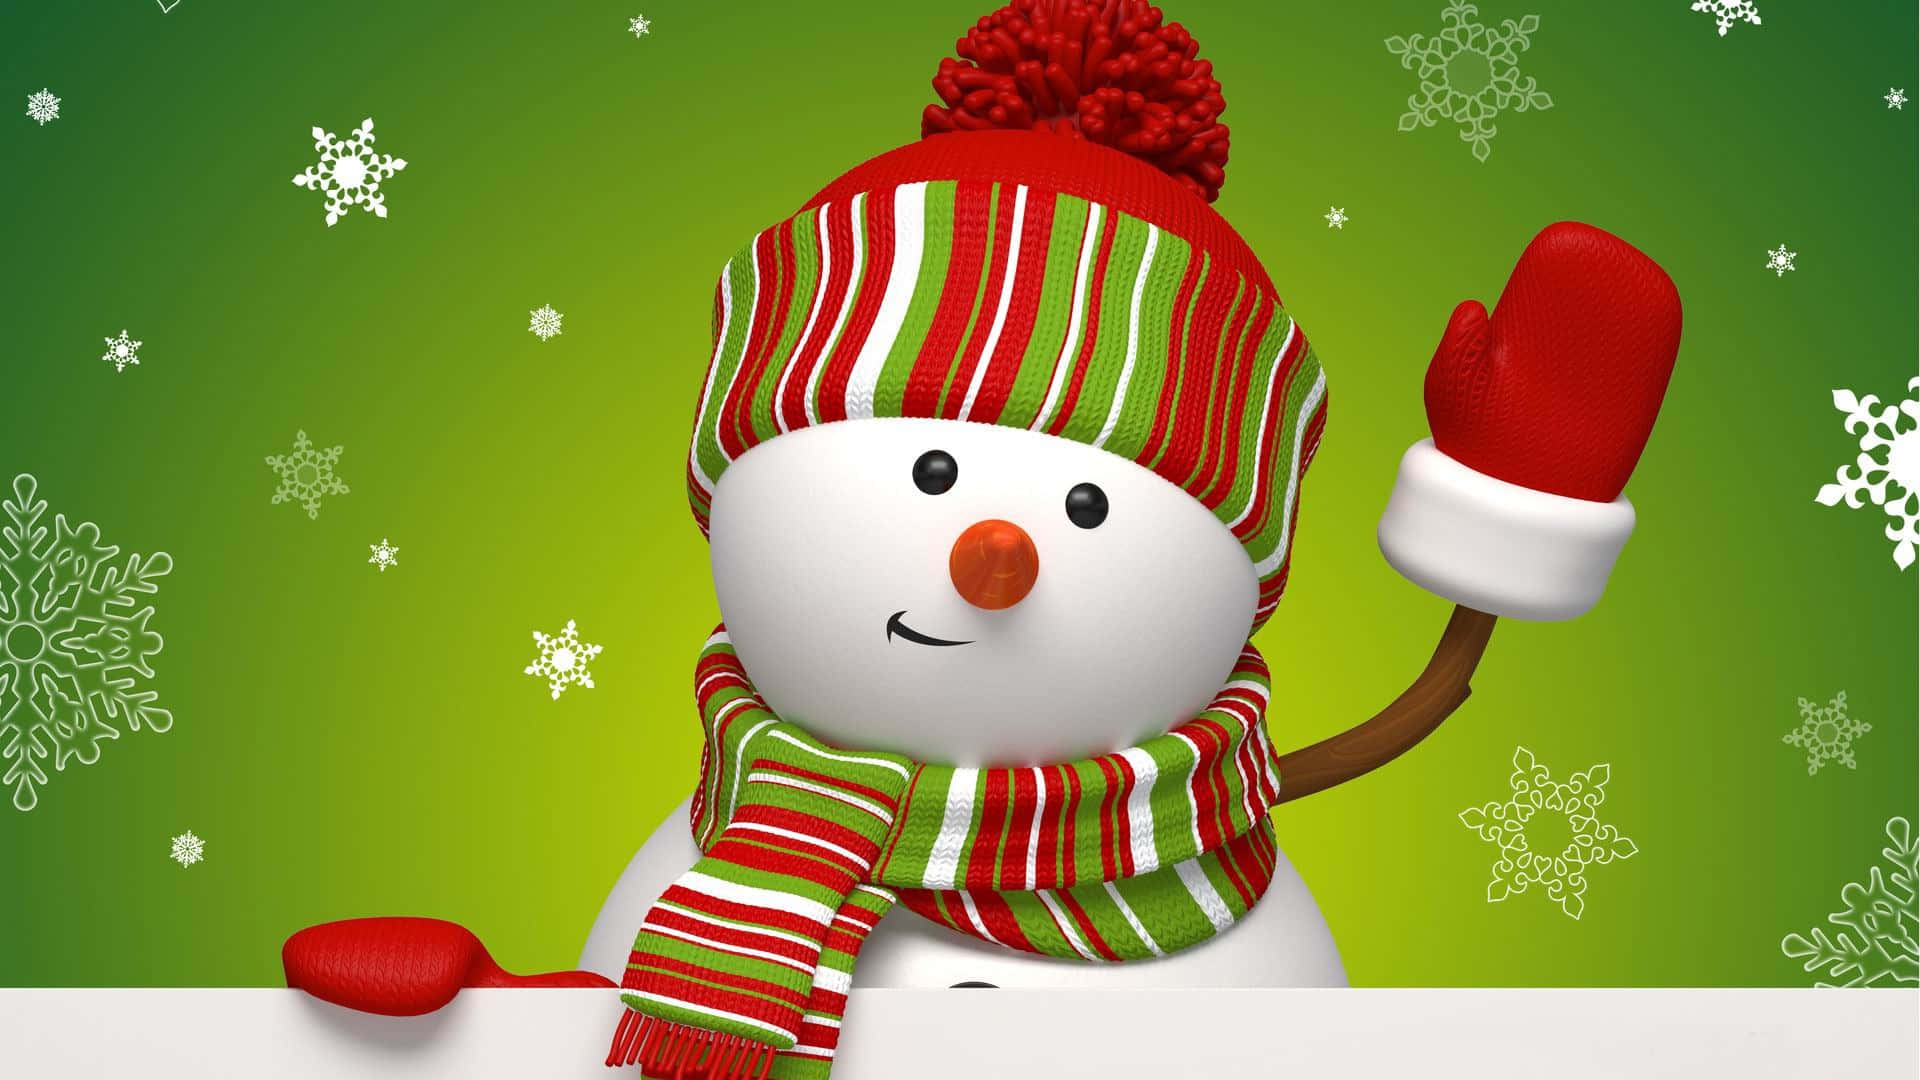 Cheerful Snowman Winter Vibes.jpg Wallpaper